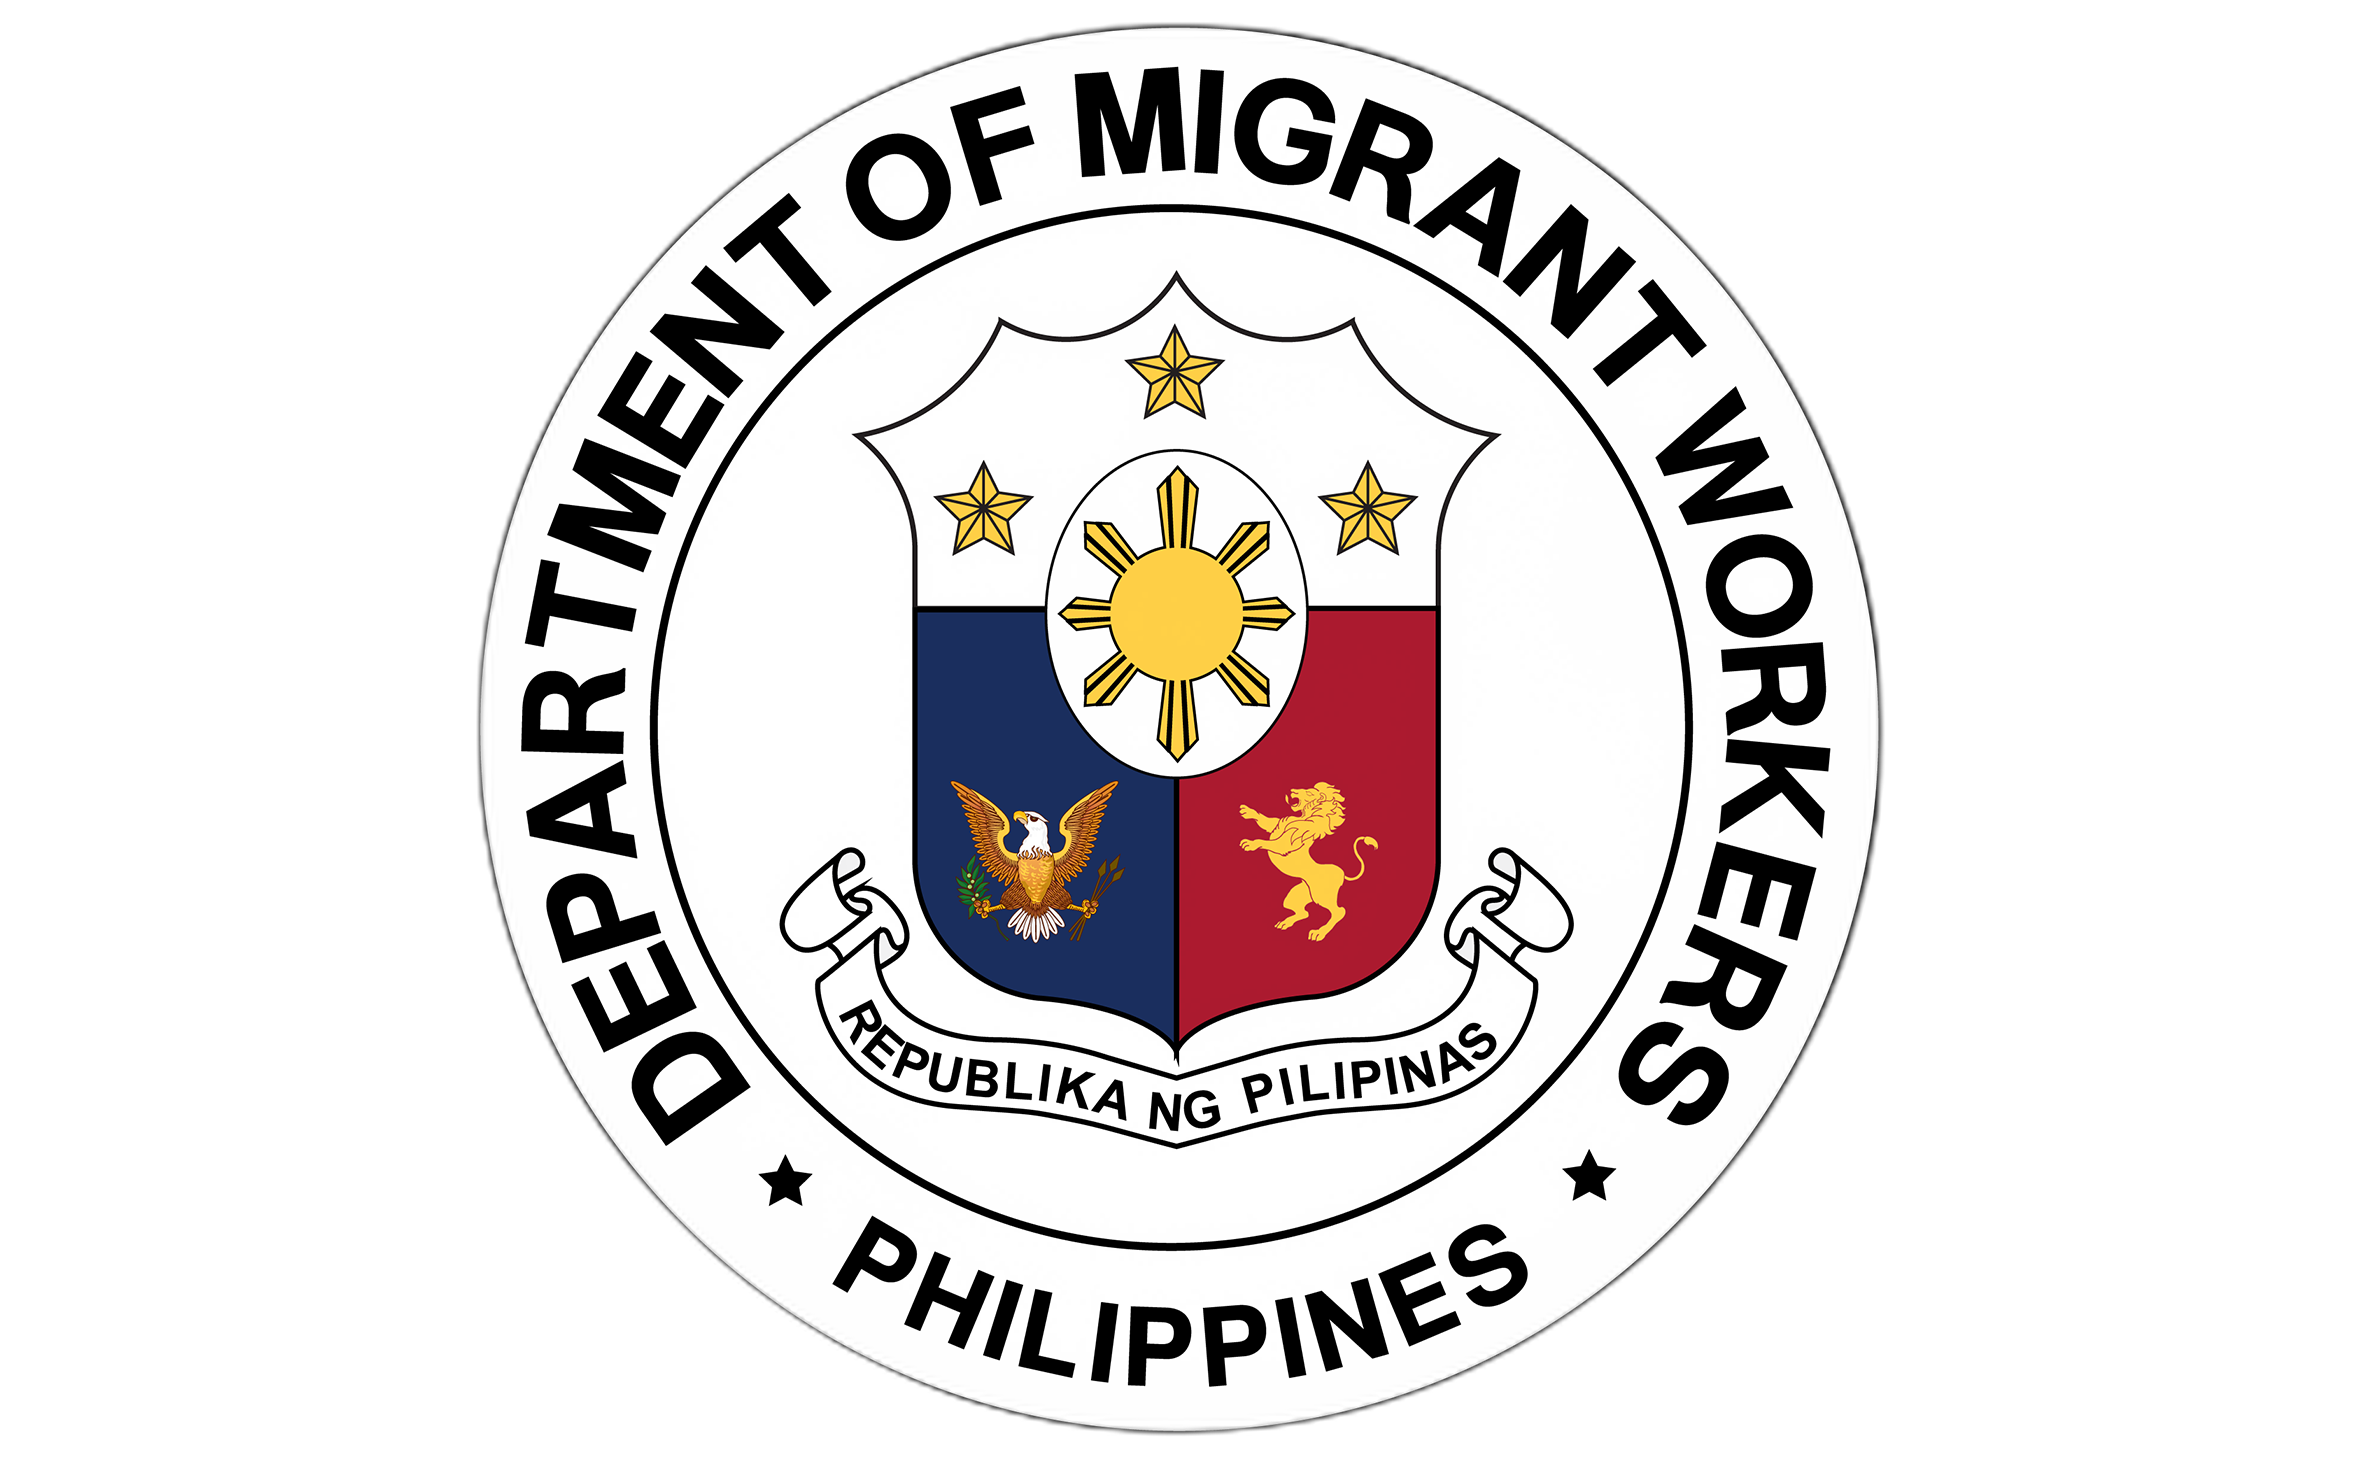 Department of Migrant Workers Certificate